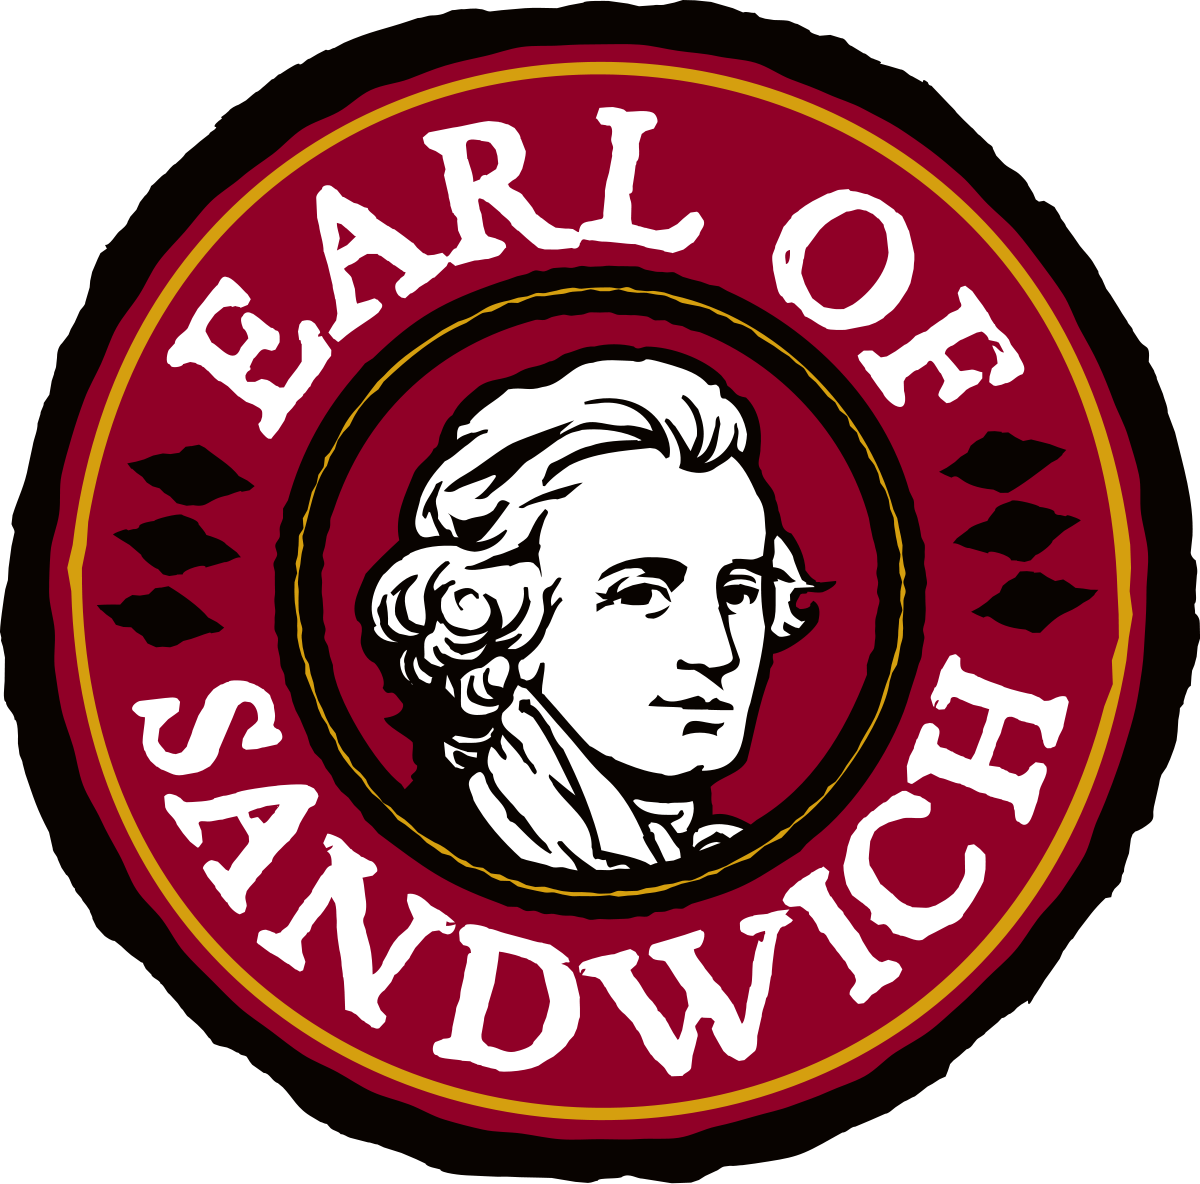 1200px-Earl_of_Sandwich_(restaurant)_logo.png